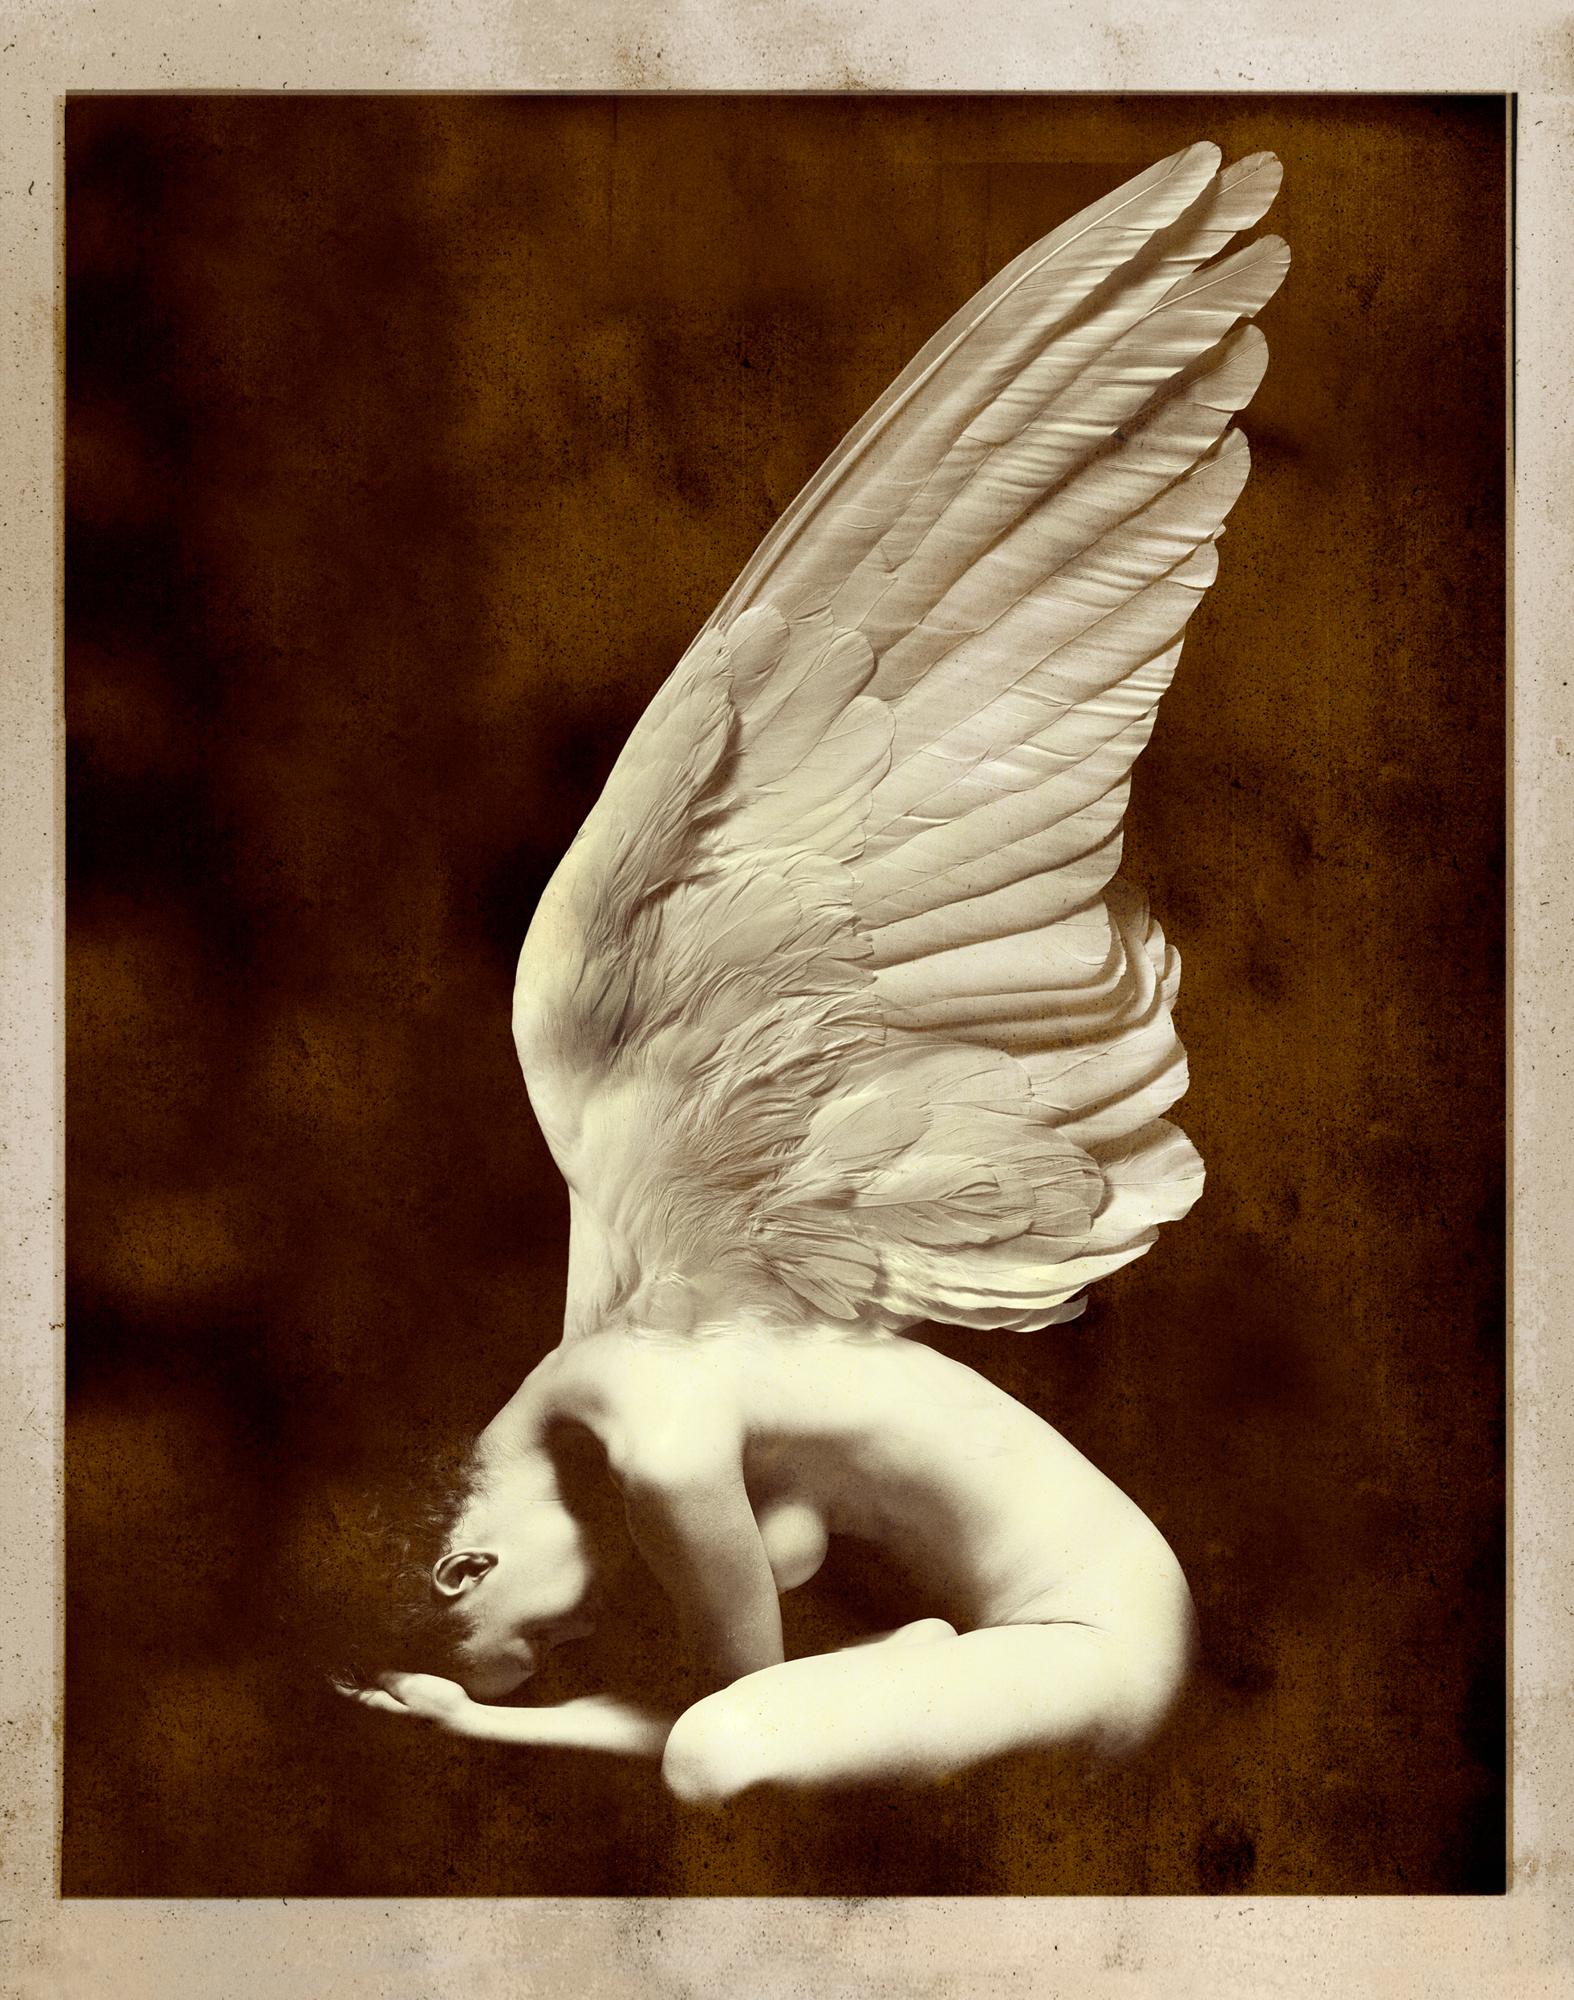 Giovanni Gastel Figurative Photograph - Untitled Angel 1